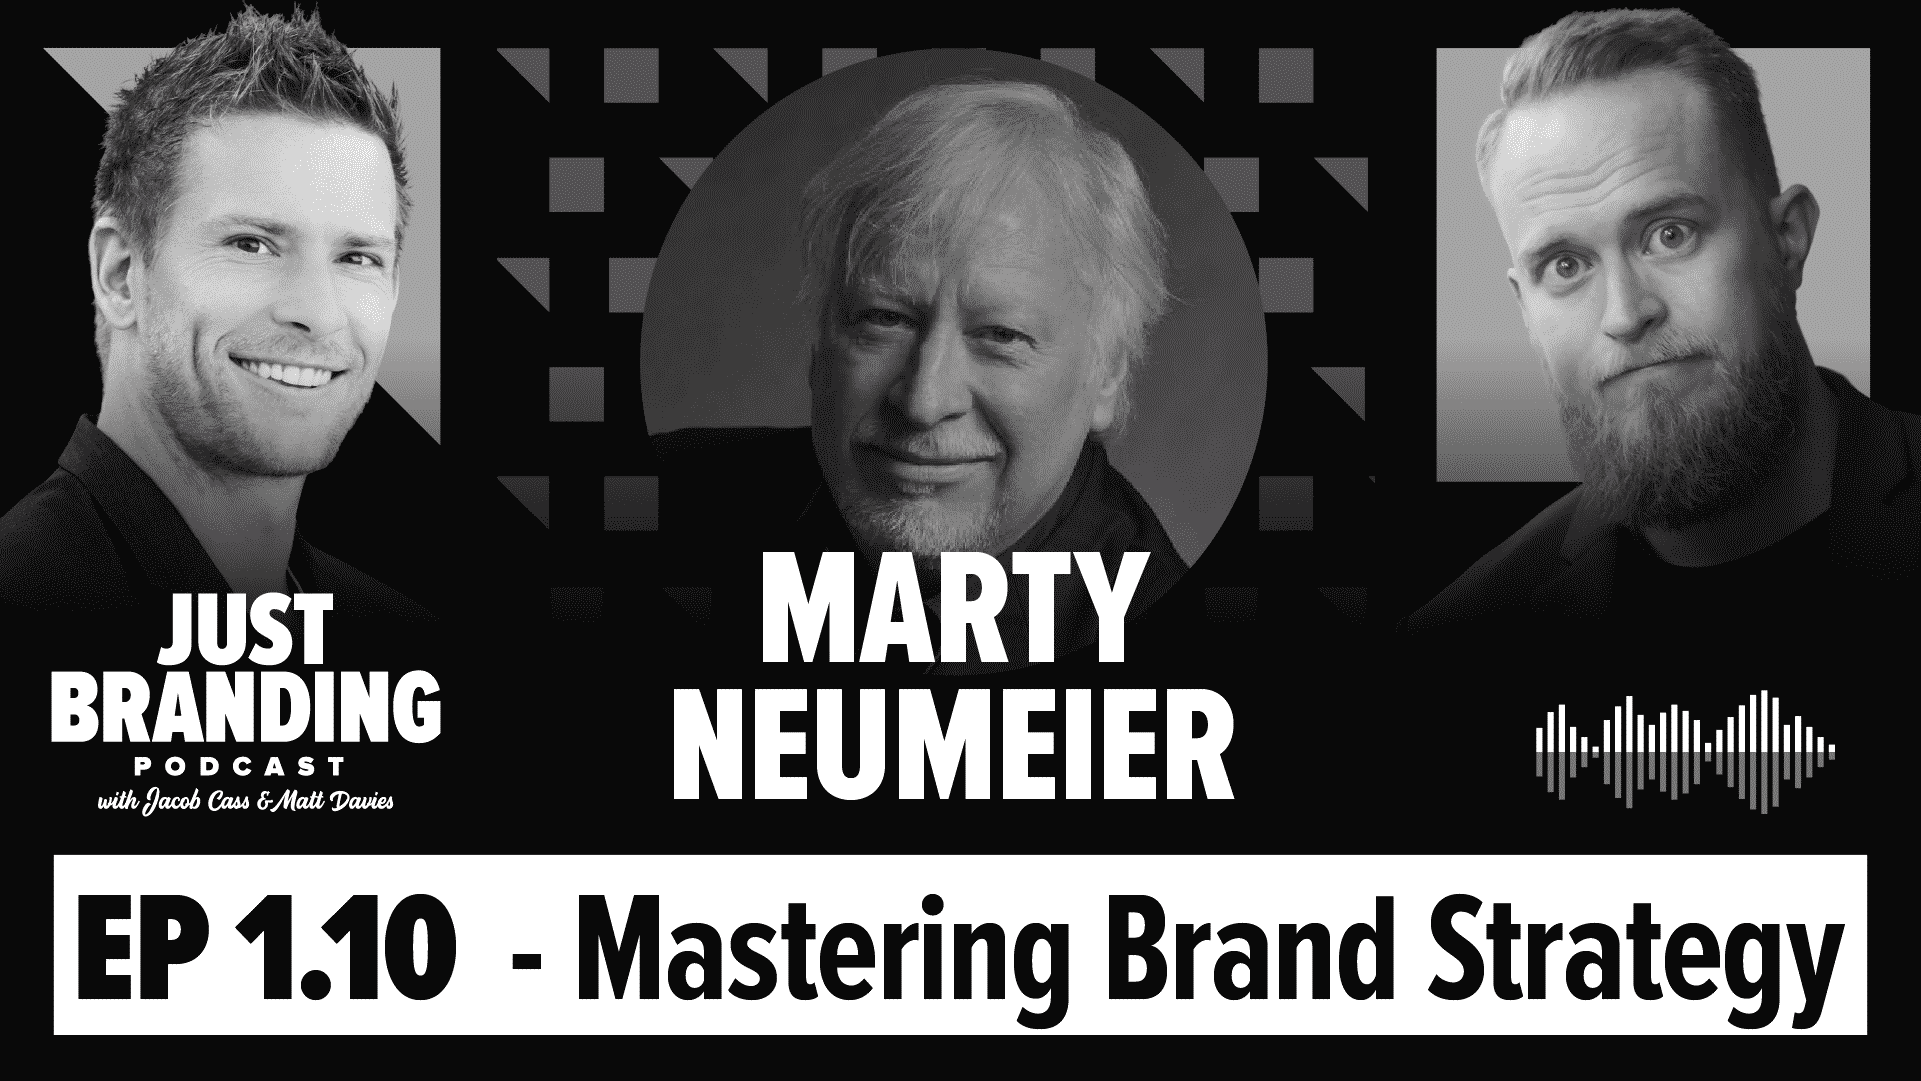 Marty Neumeier Podcast